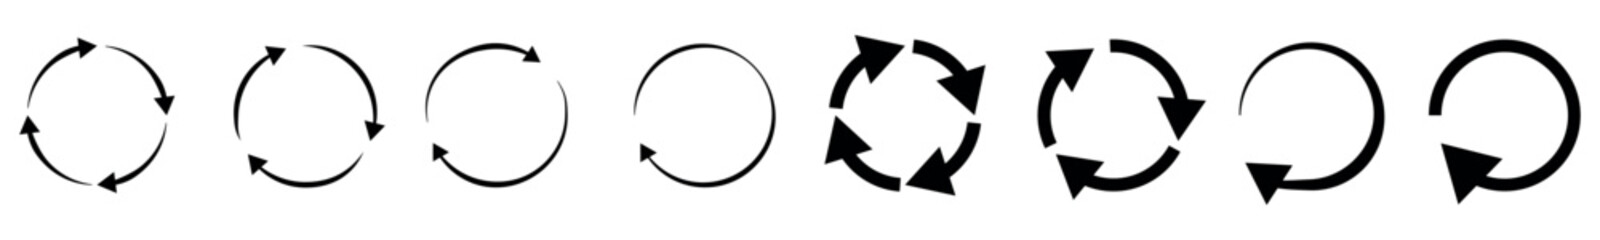 Reload arrow set. Reload circle arrows collection. Rotation arrow icon vector.